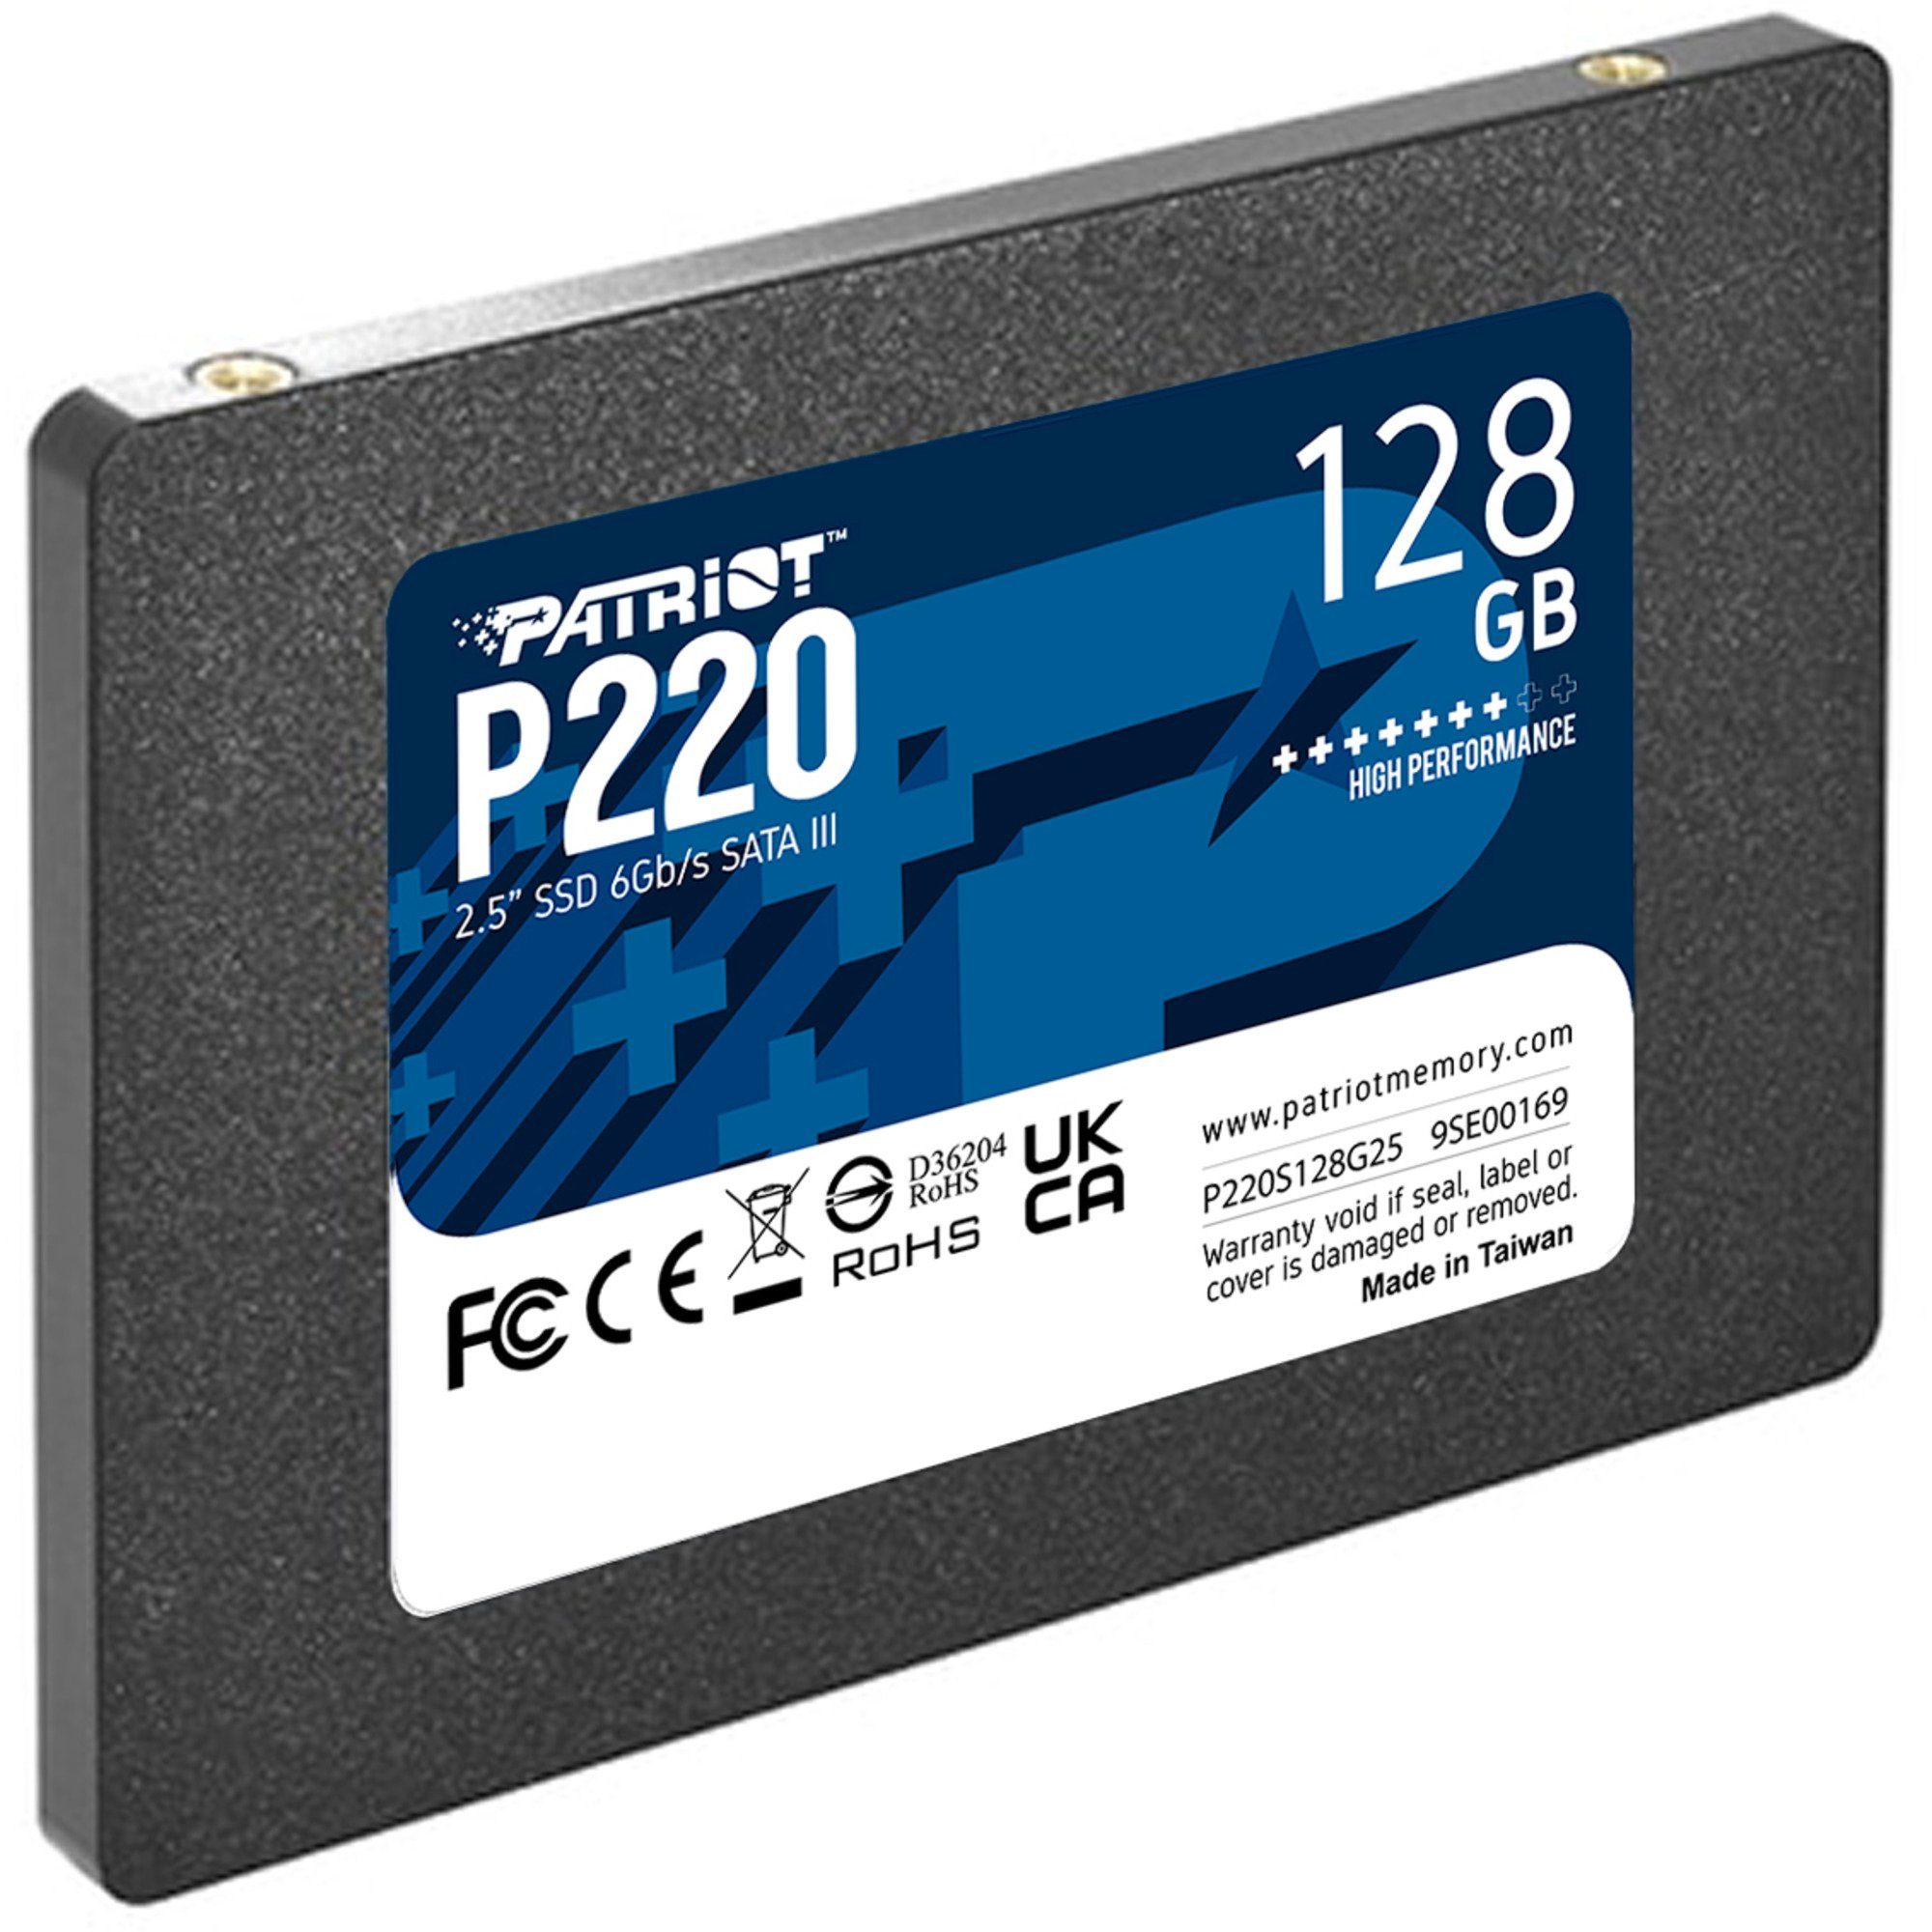 Patriot P220 128 GB SSD-Festplatte (128 GB) 2,5""